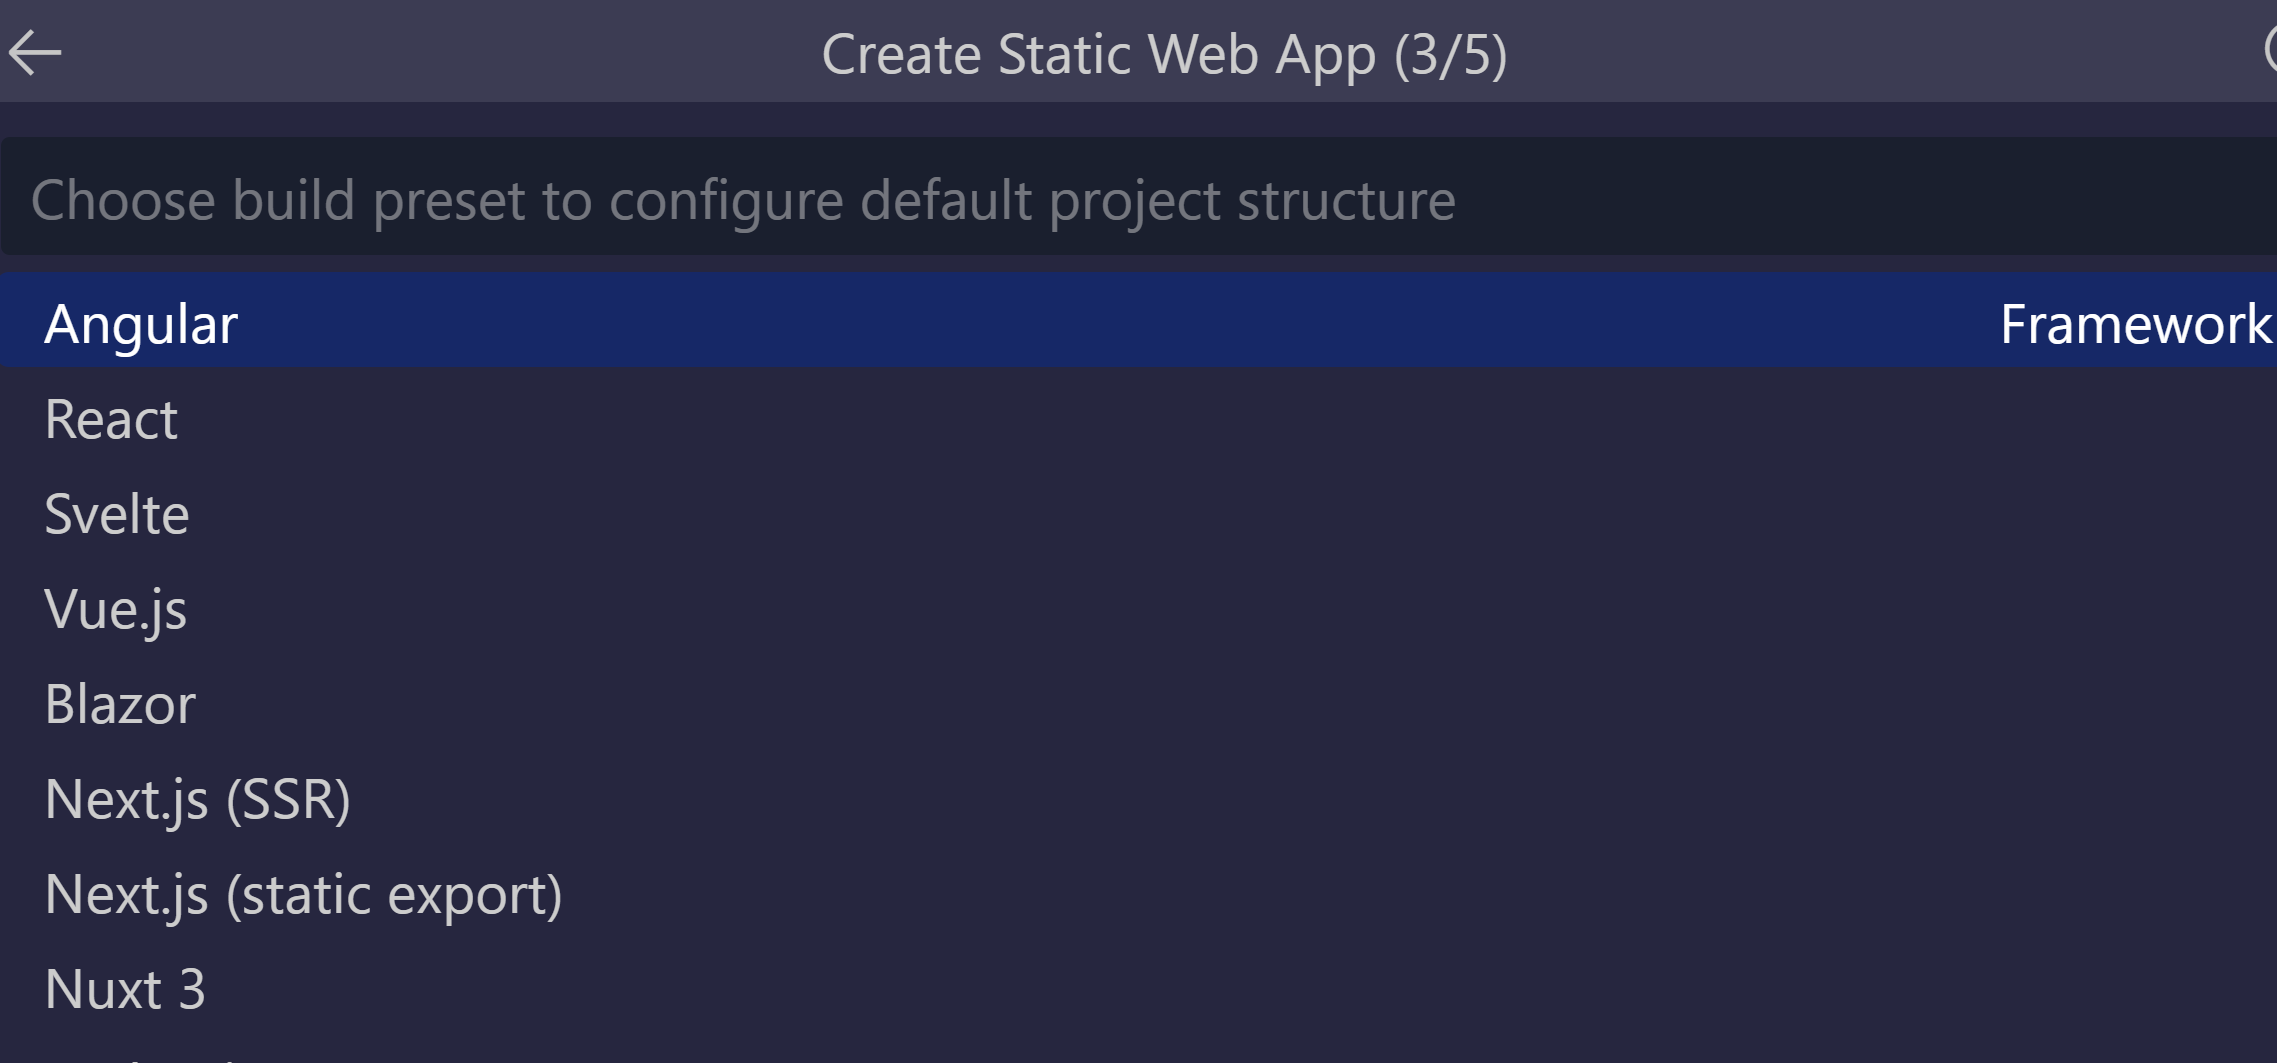 Screenshot showing the angular option selected.